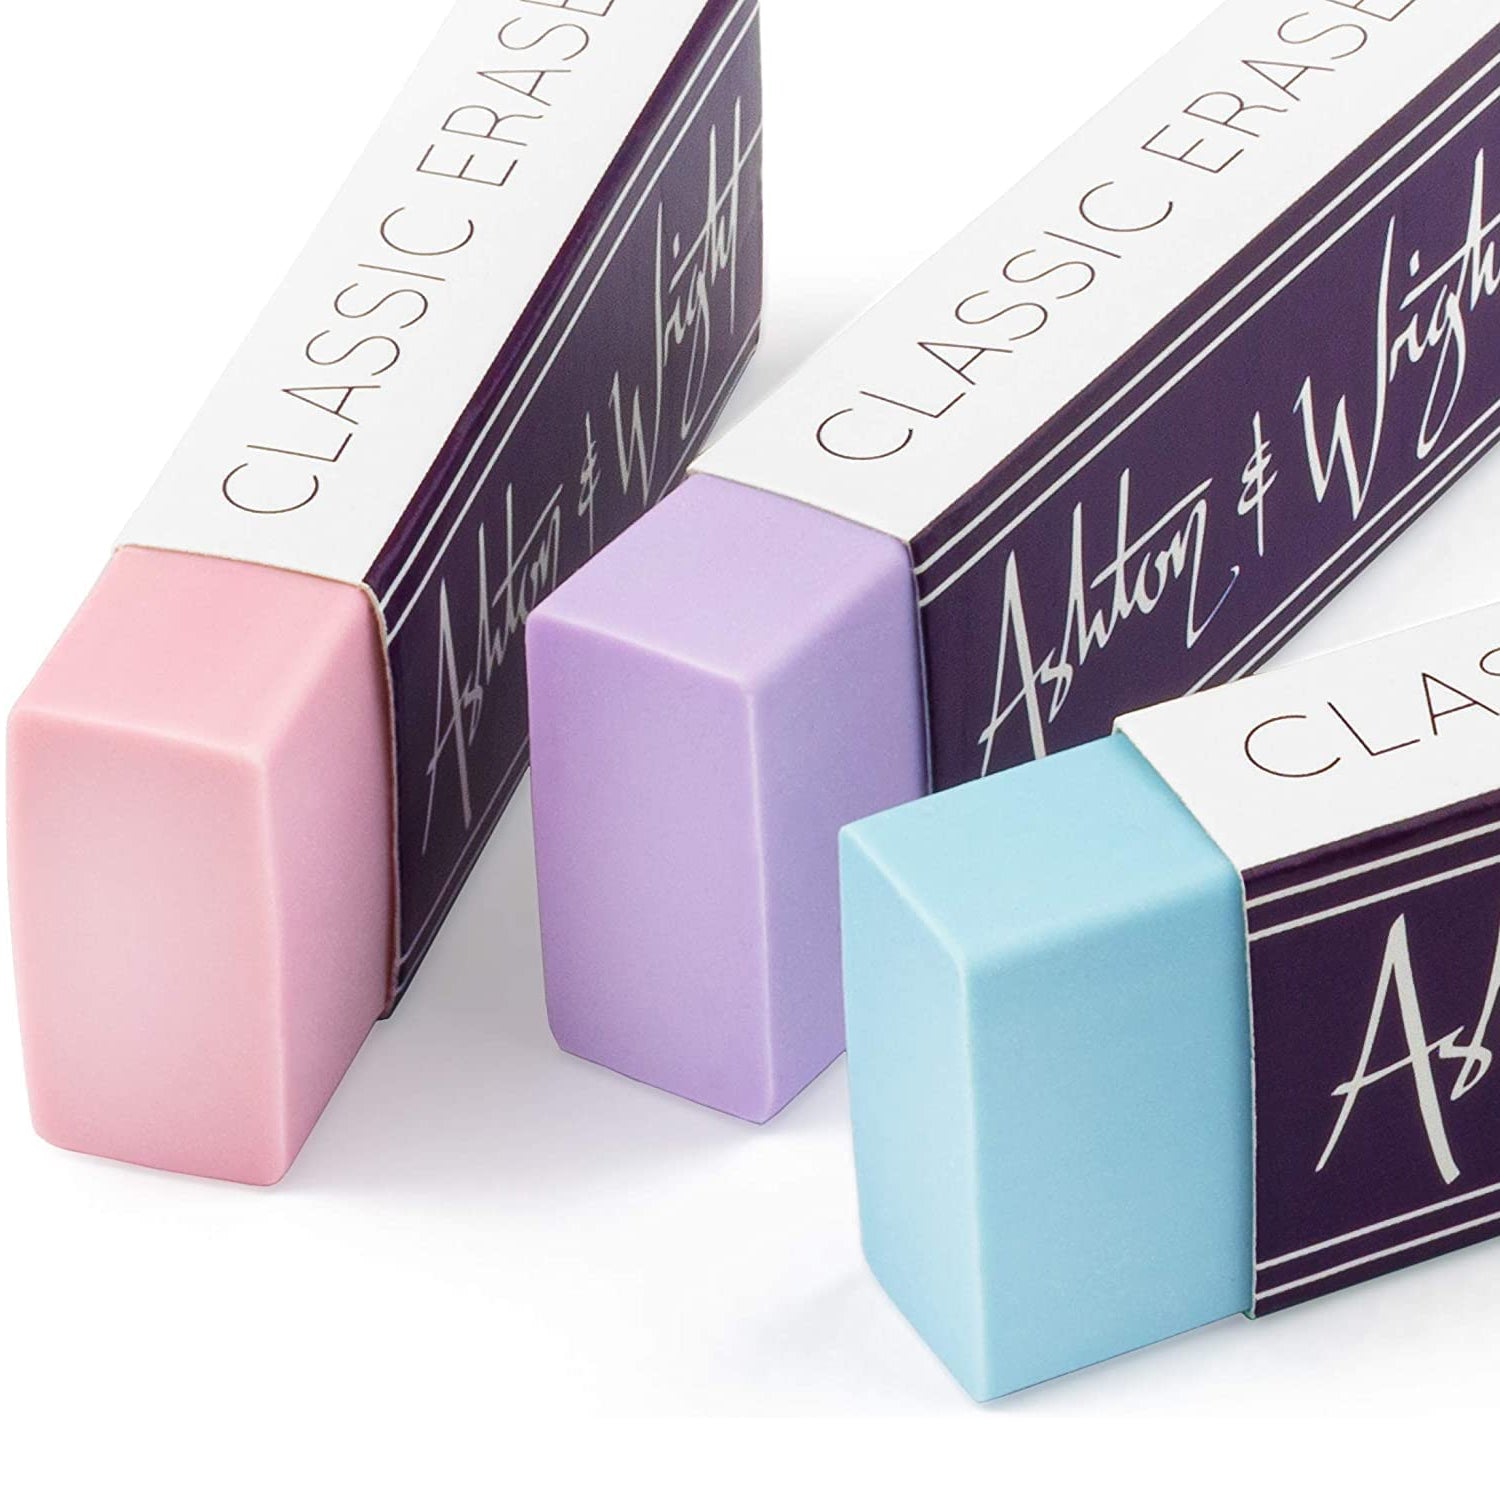 Classic Latex-Free Plastic Erasers - Pastel + 1 White